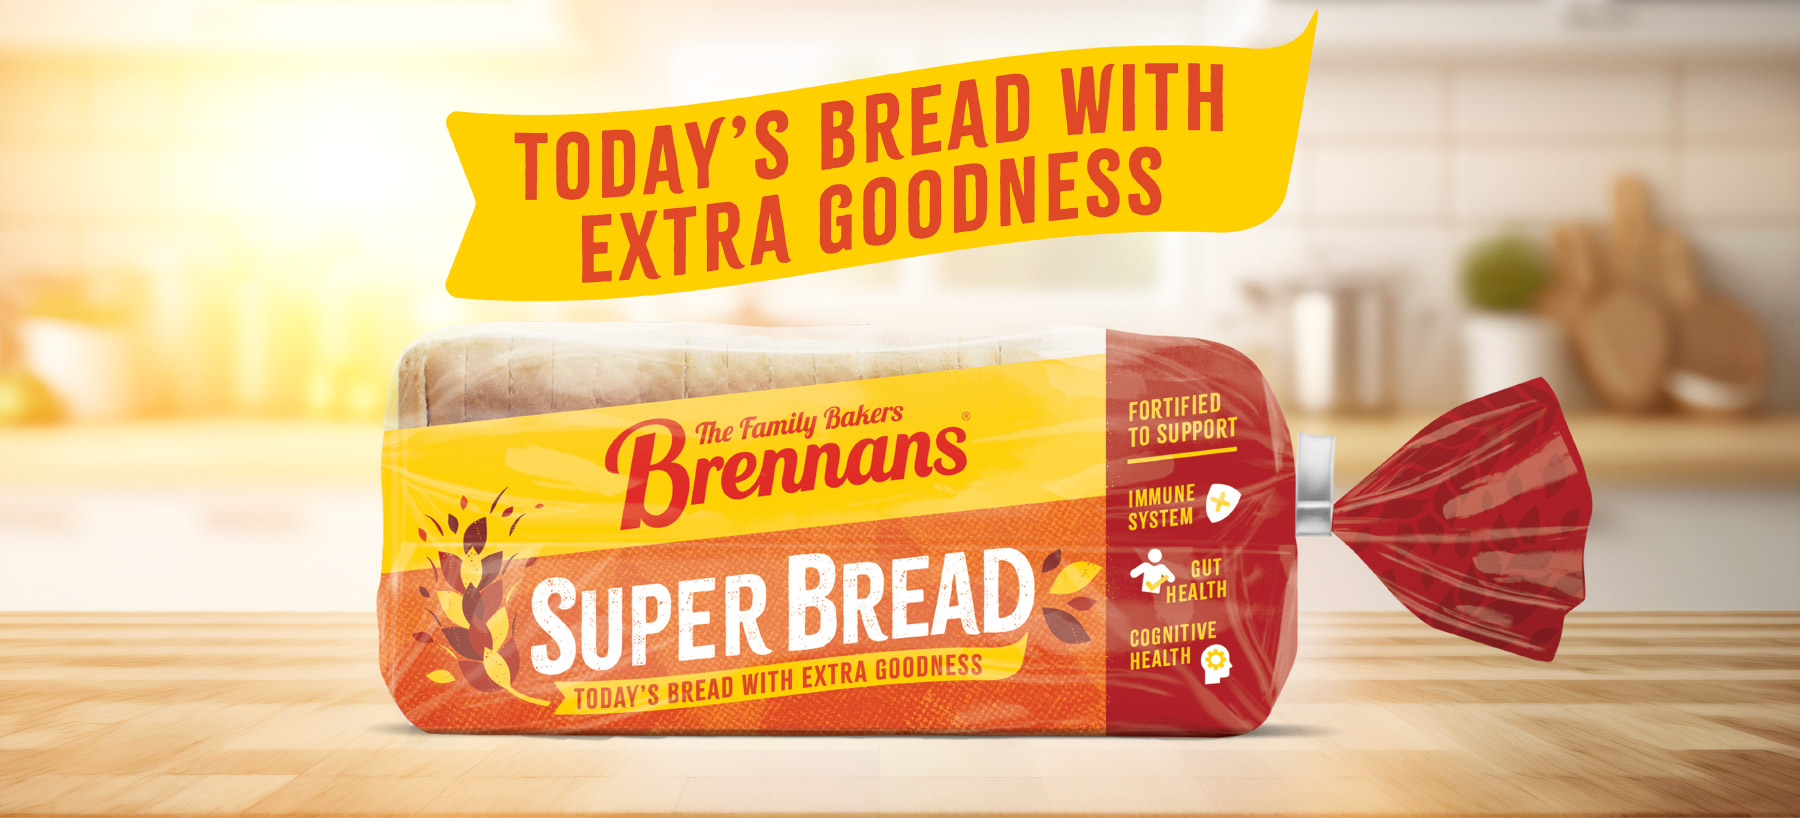 Super Bread pack shot